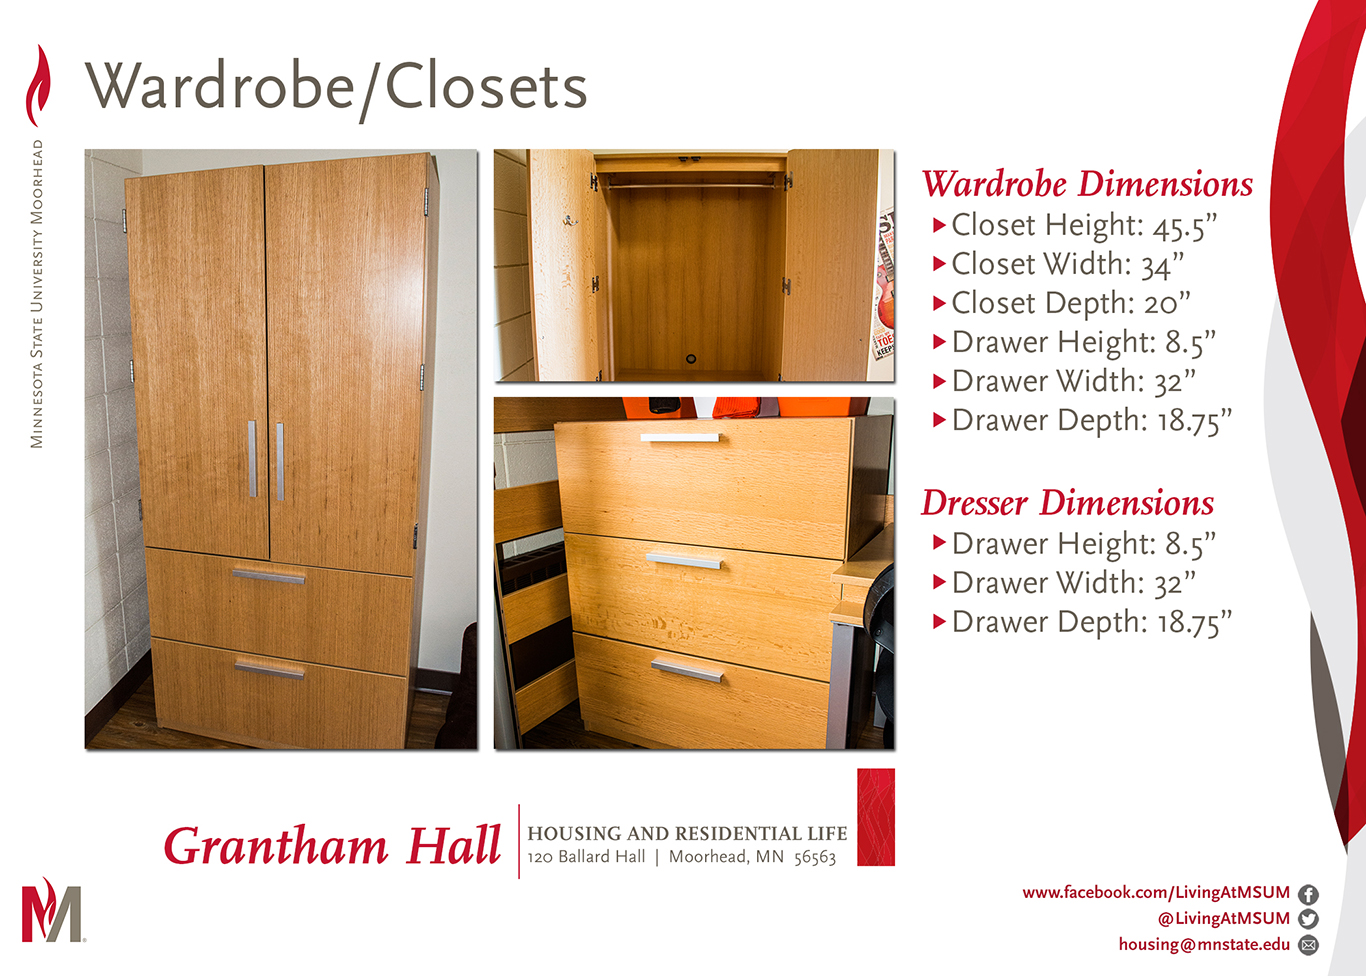 Grantham Hall Wardrobe